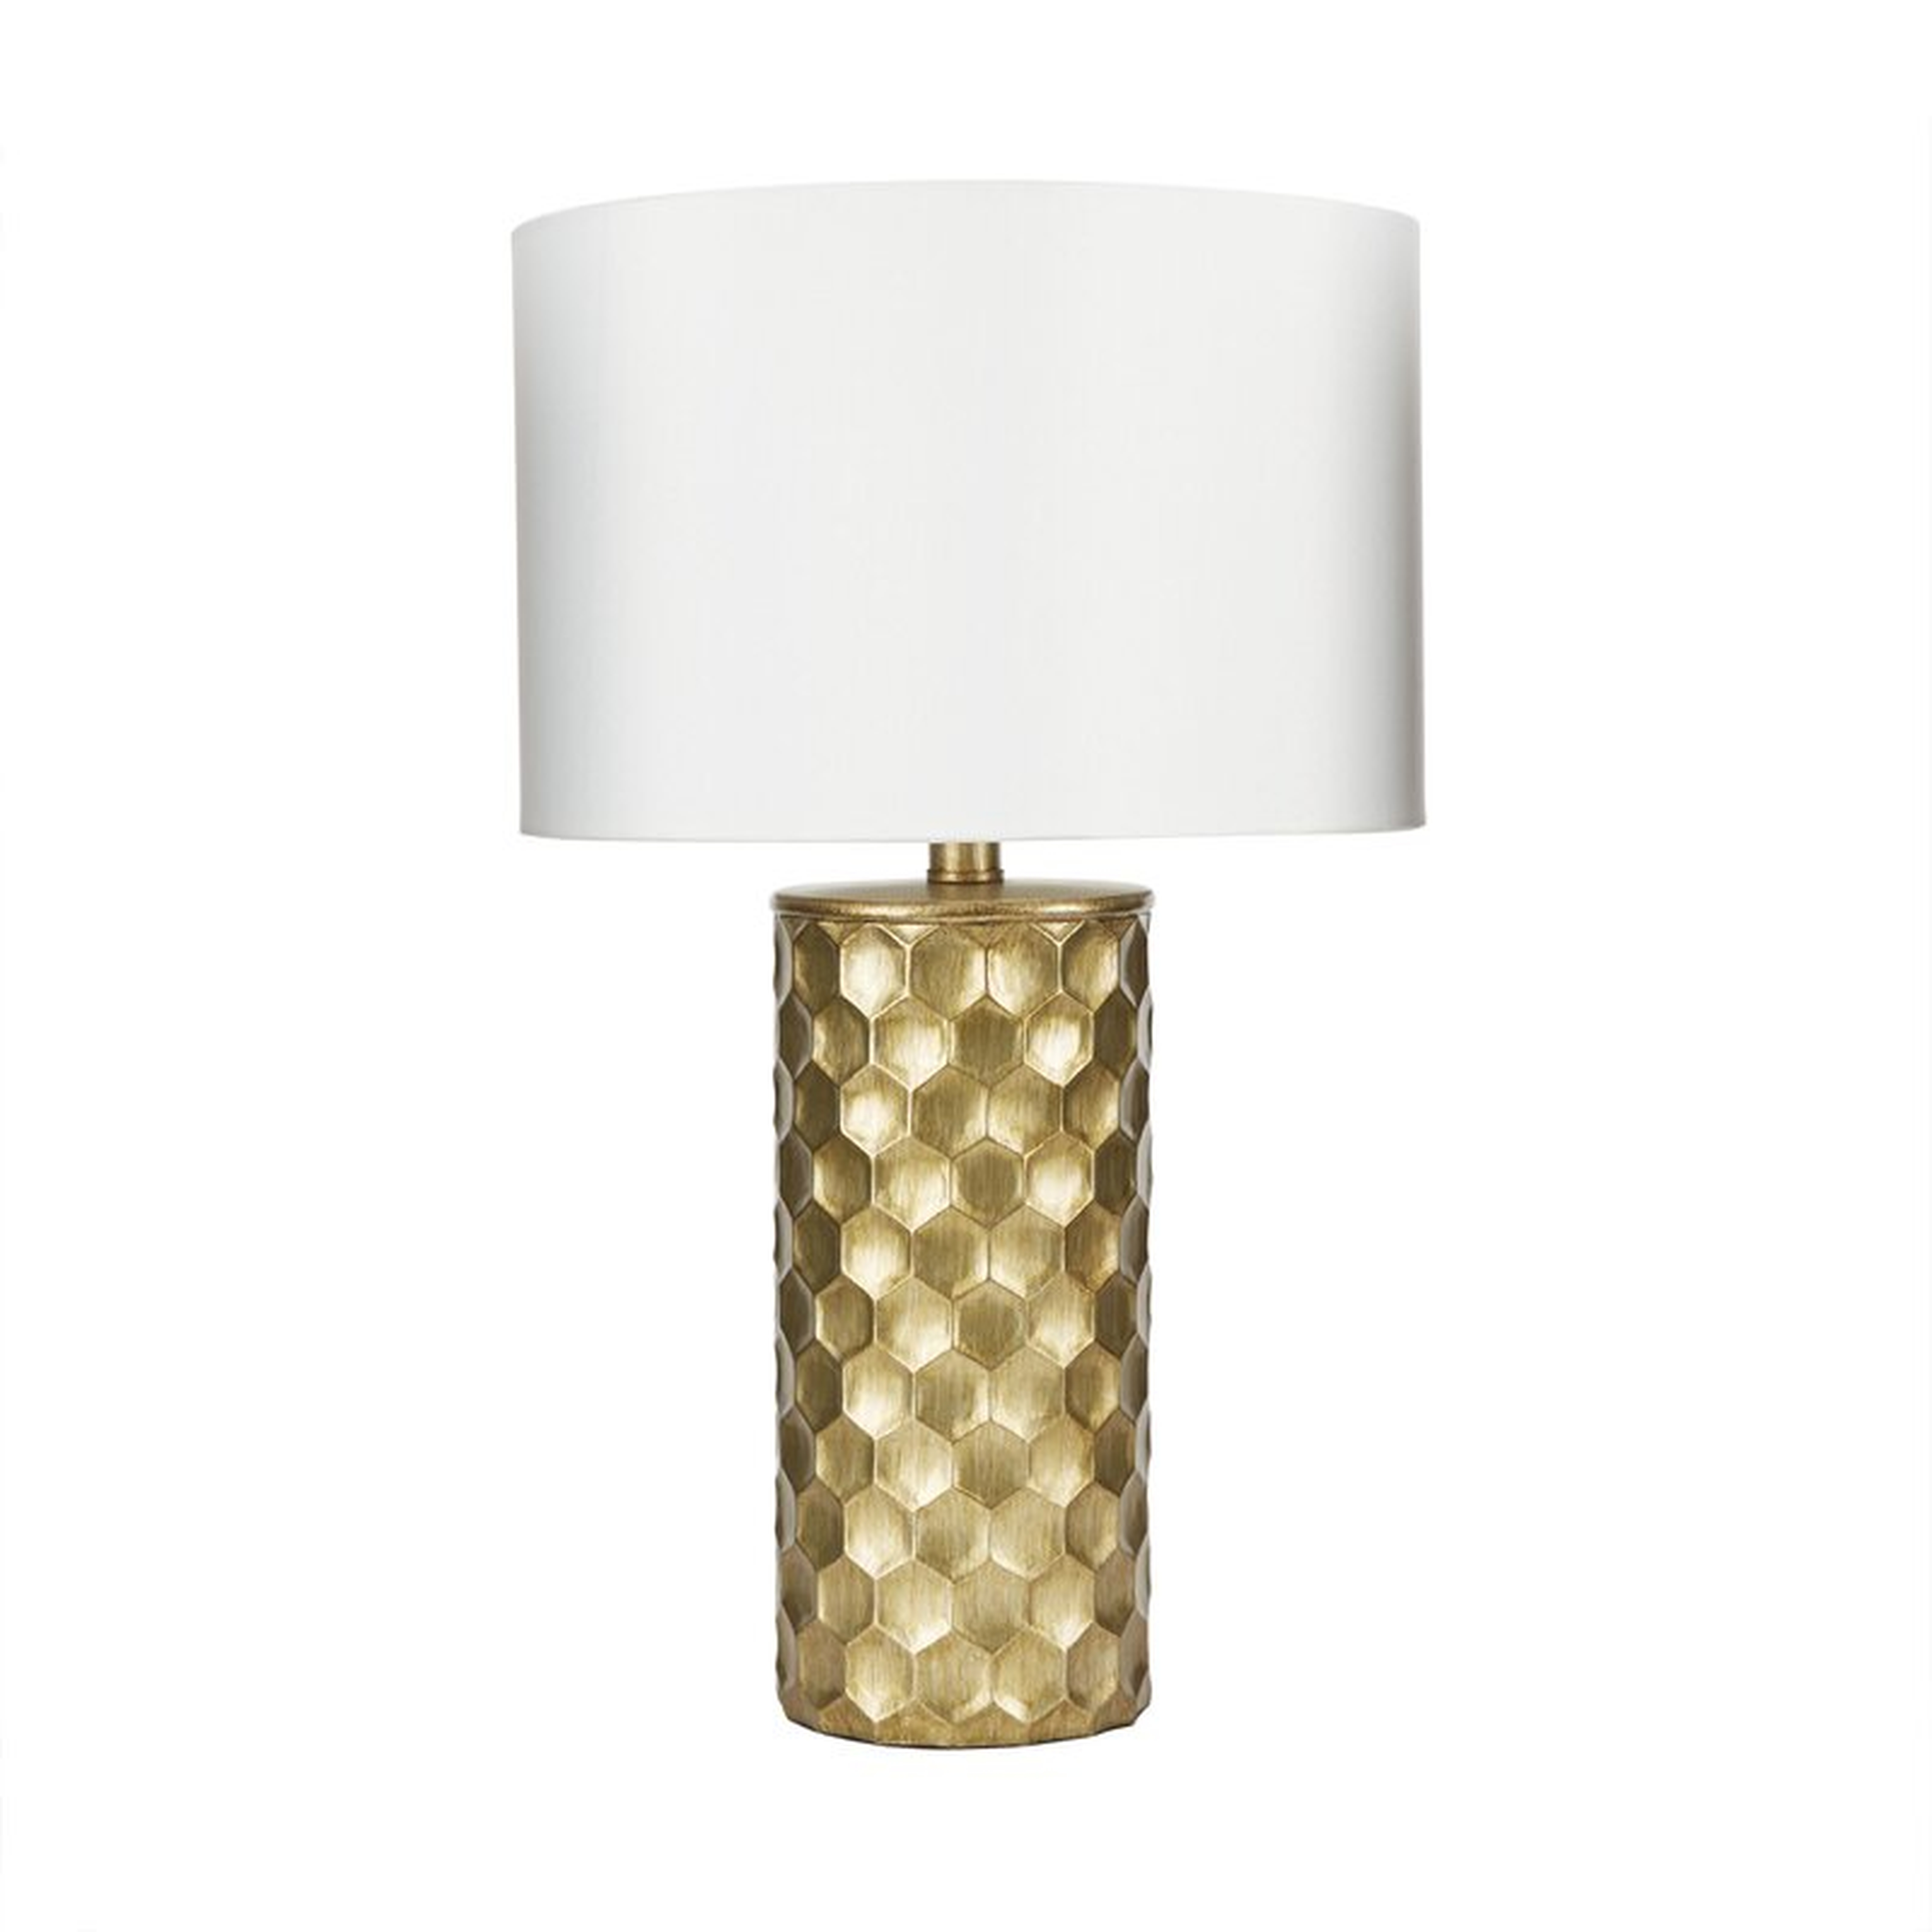 Dalke 21" Table Lamp, Gold - Wayfair